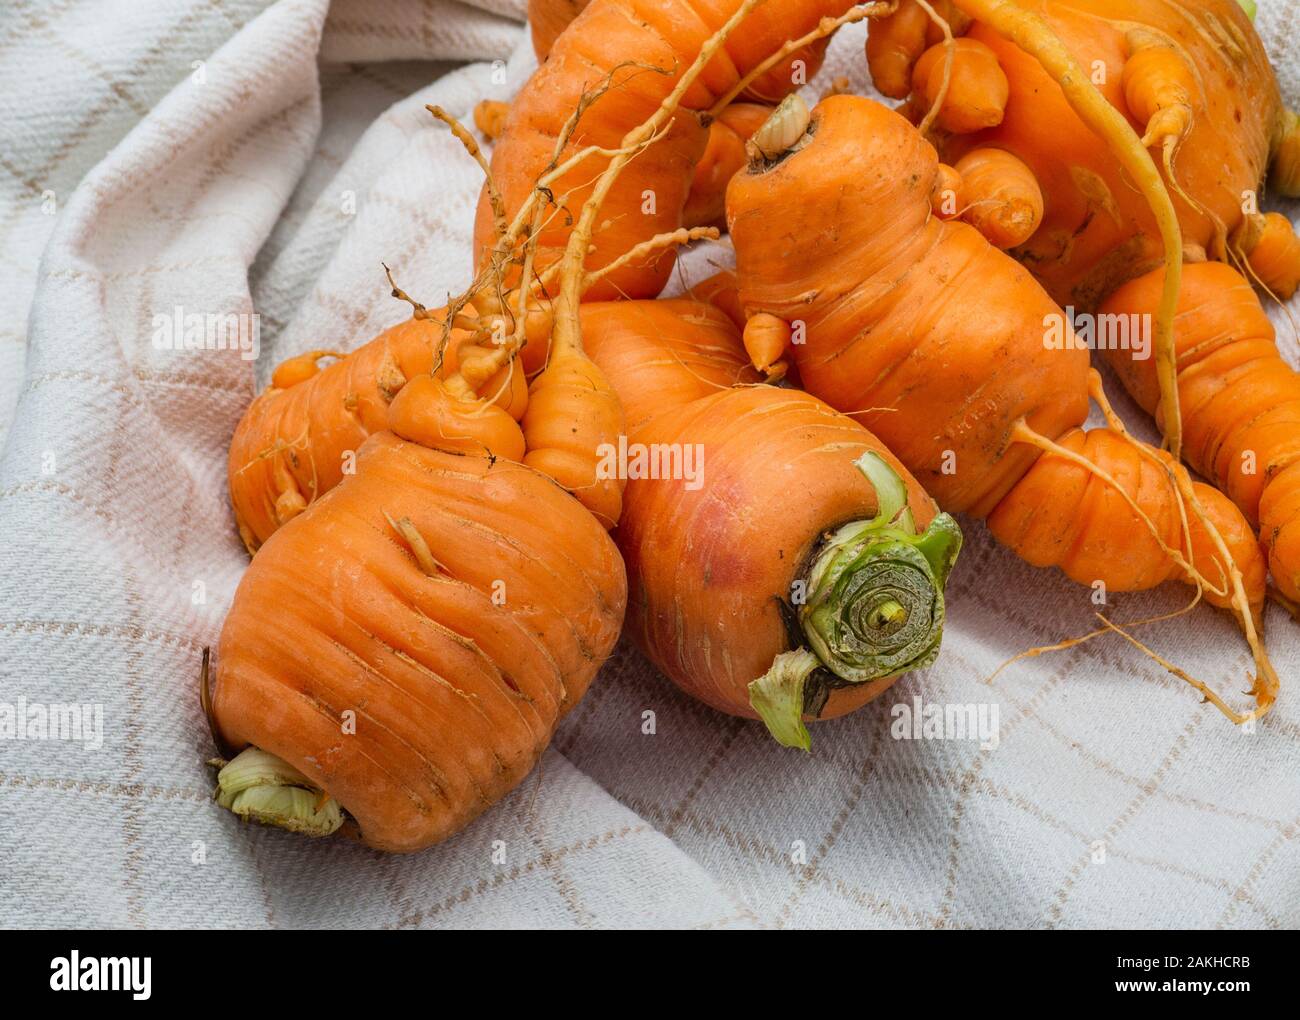 deformed carrots in a napkin Stock Photo